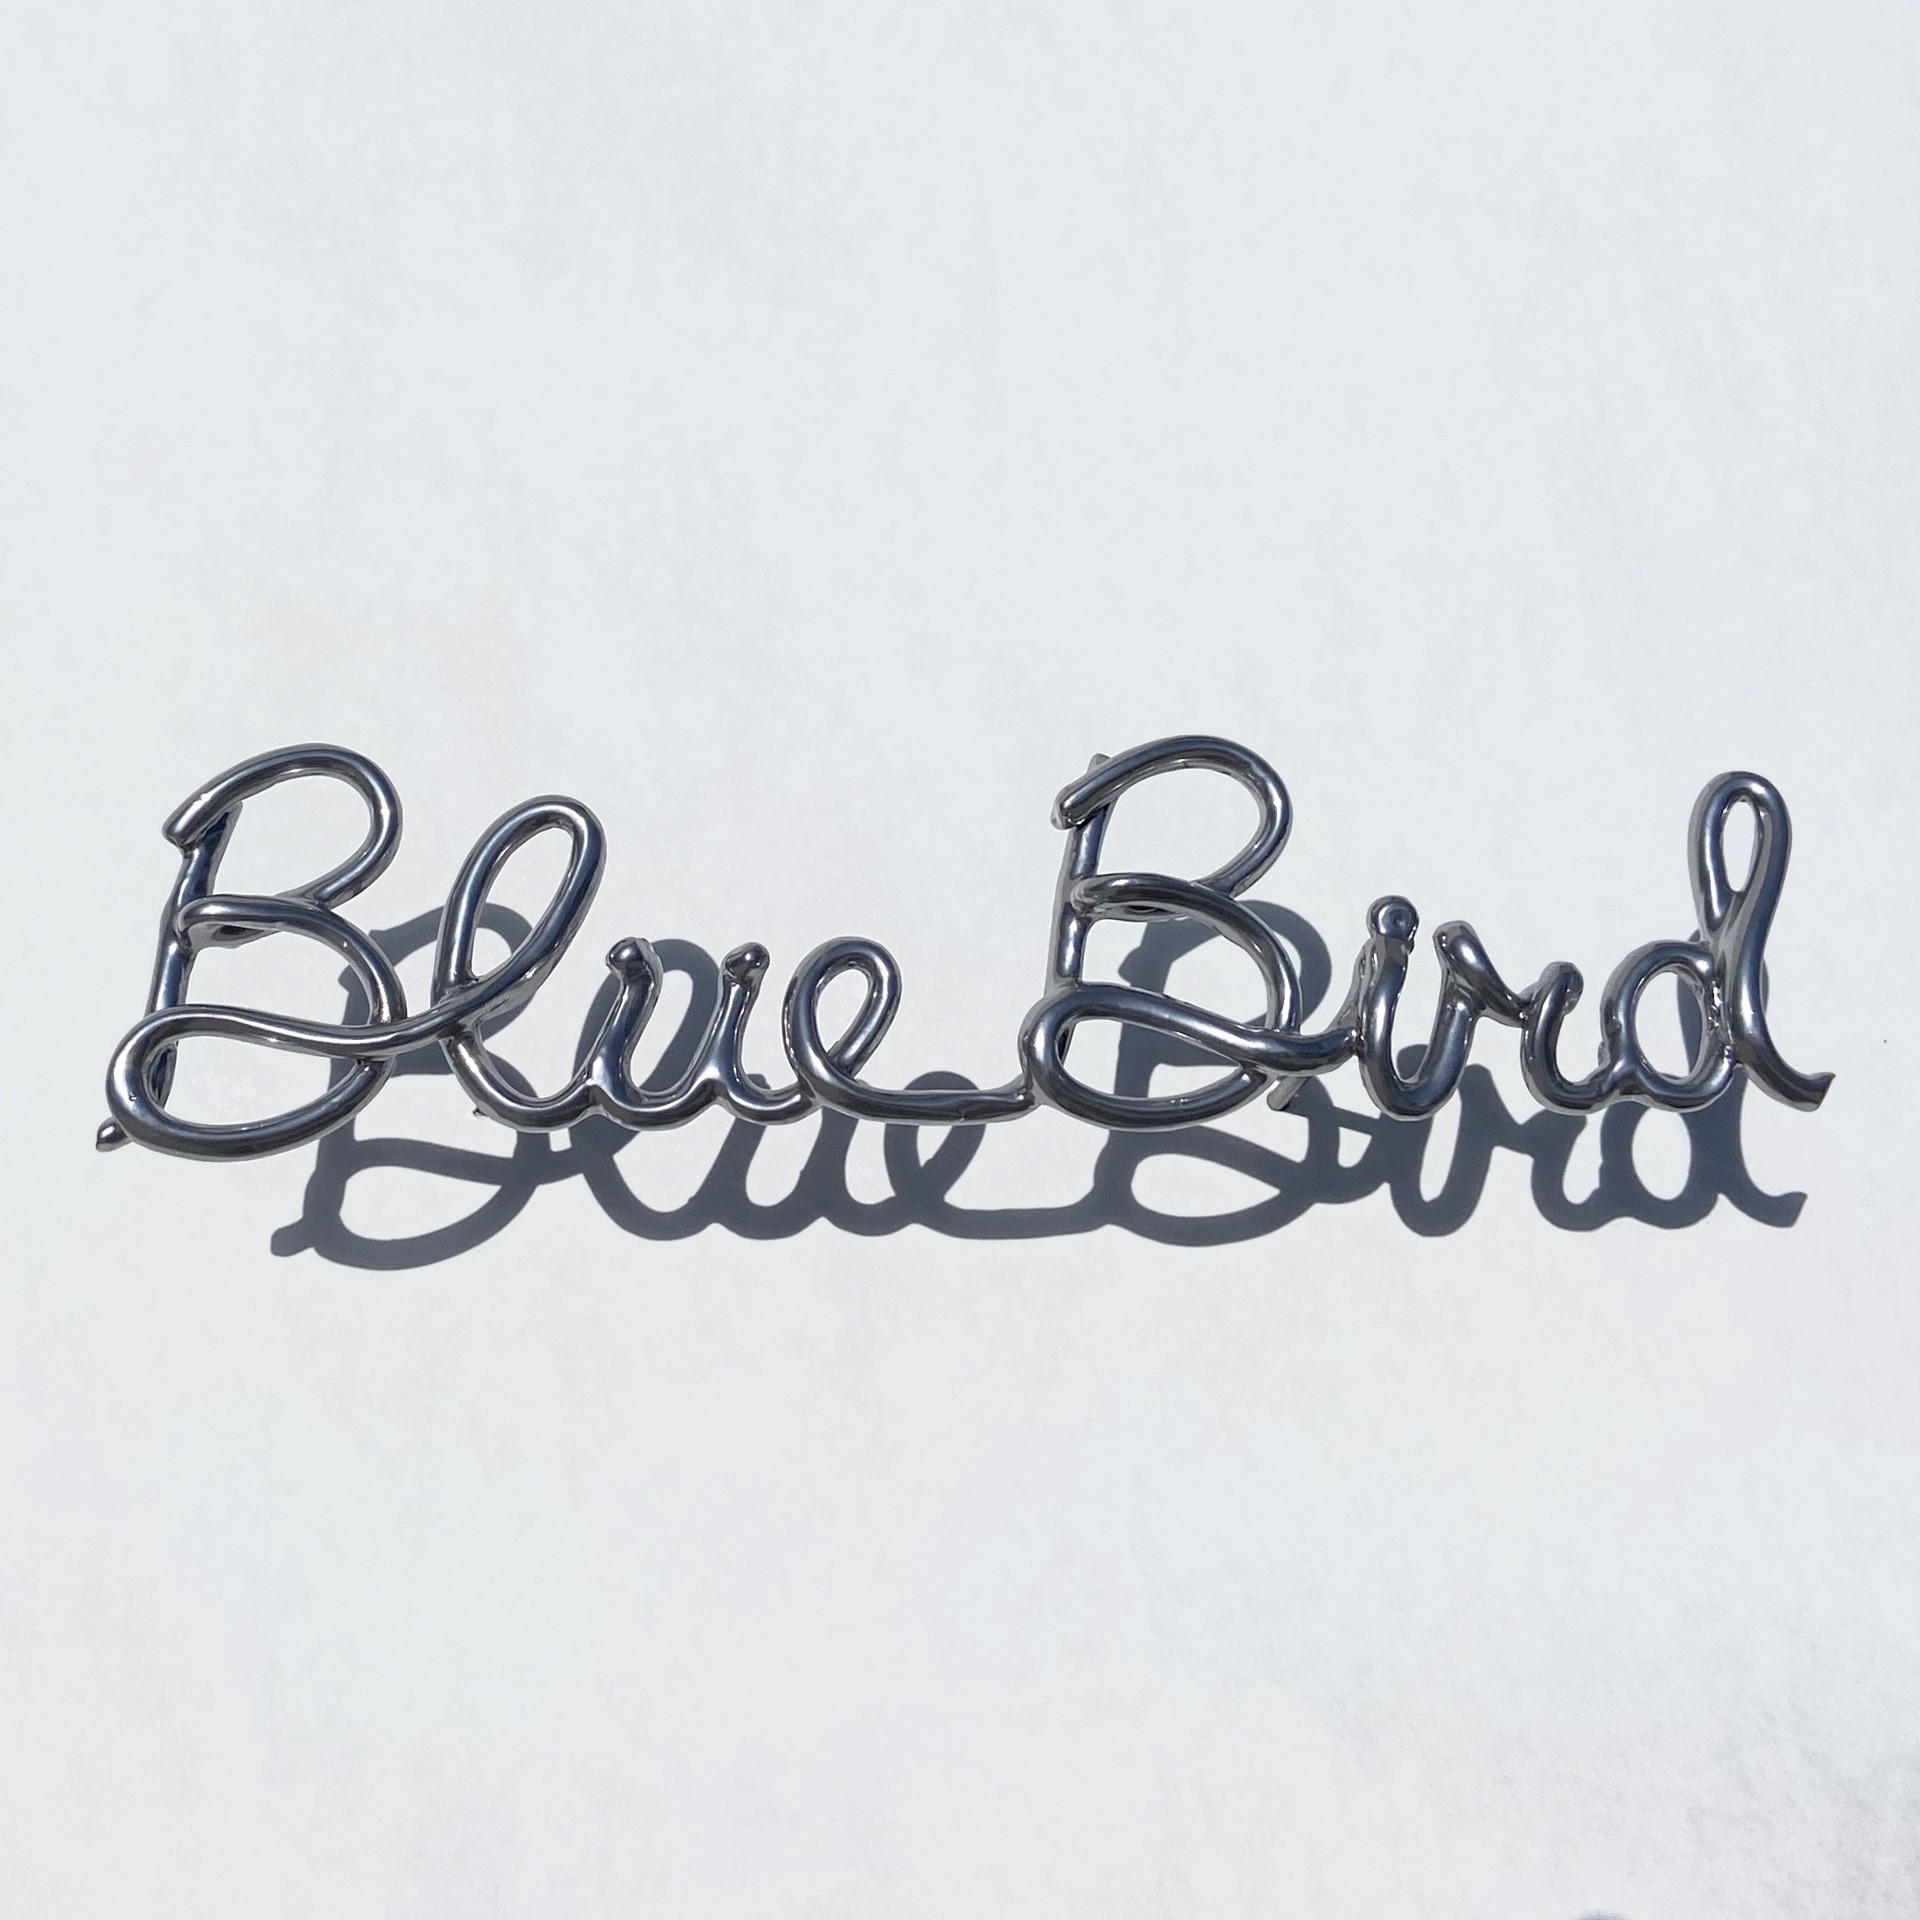 Blue Bird by Tara Conley